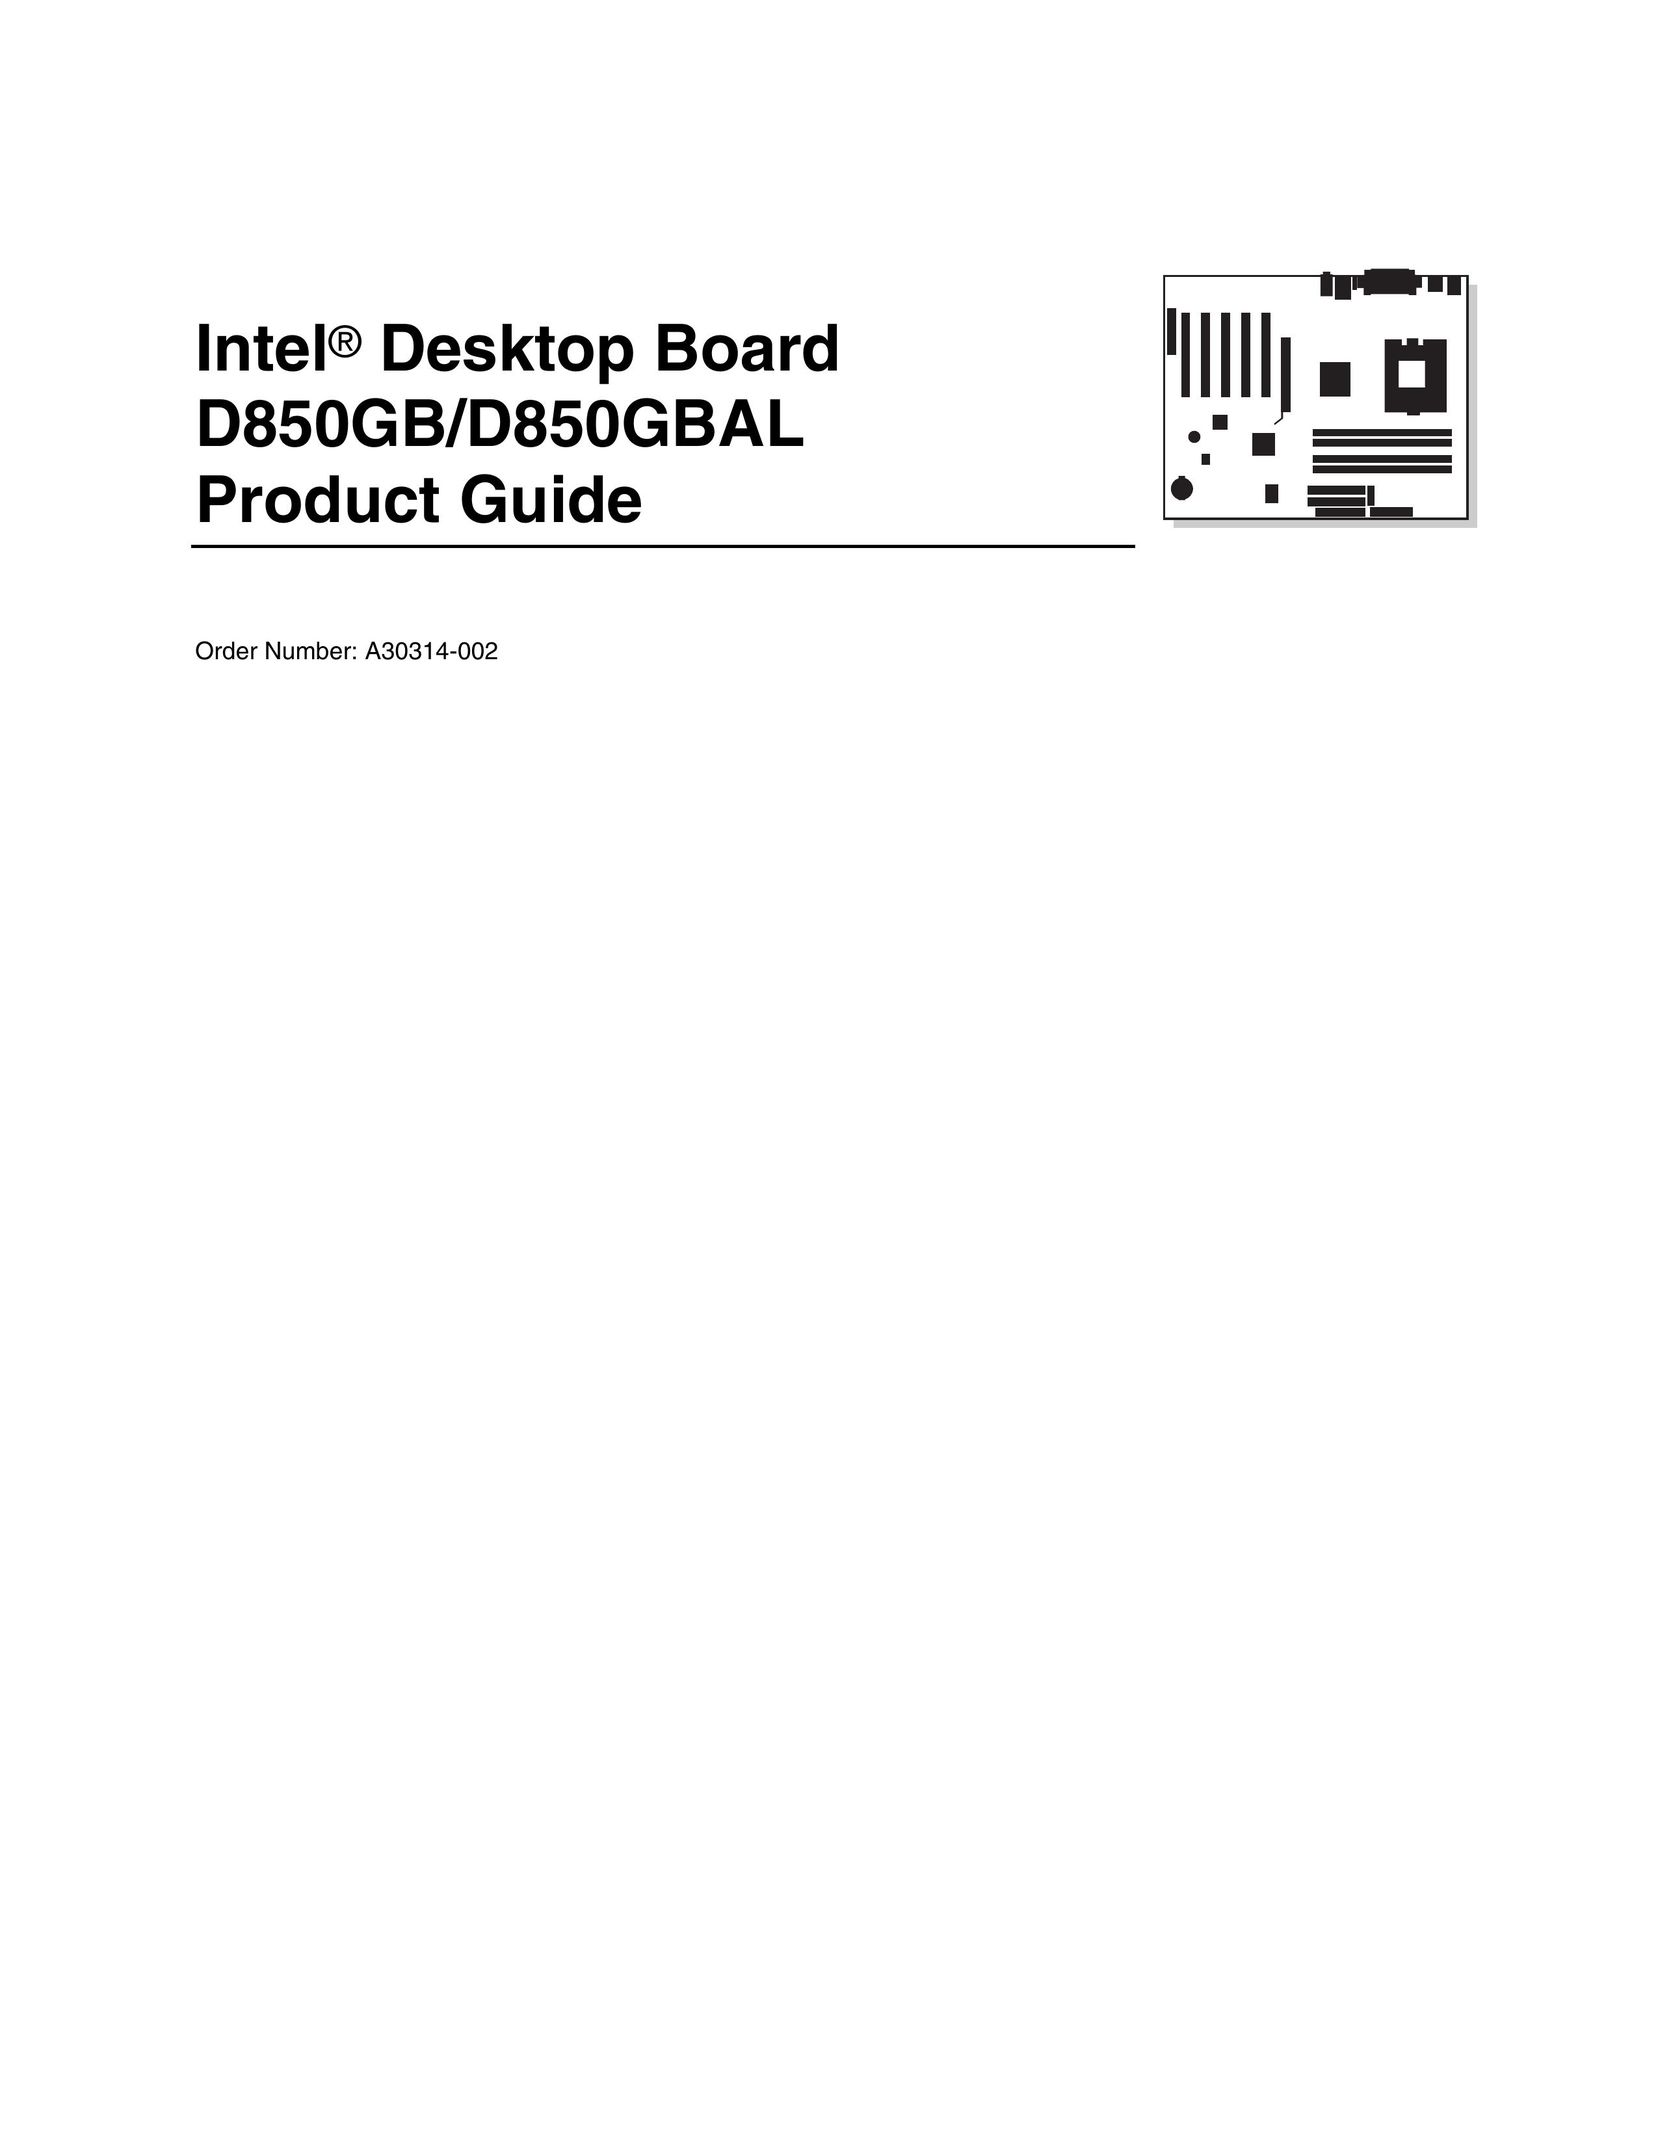 Intel D850GBAL Telephone User Manual